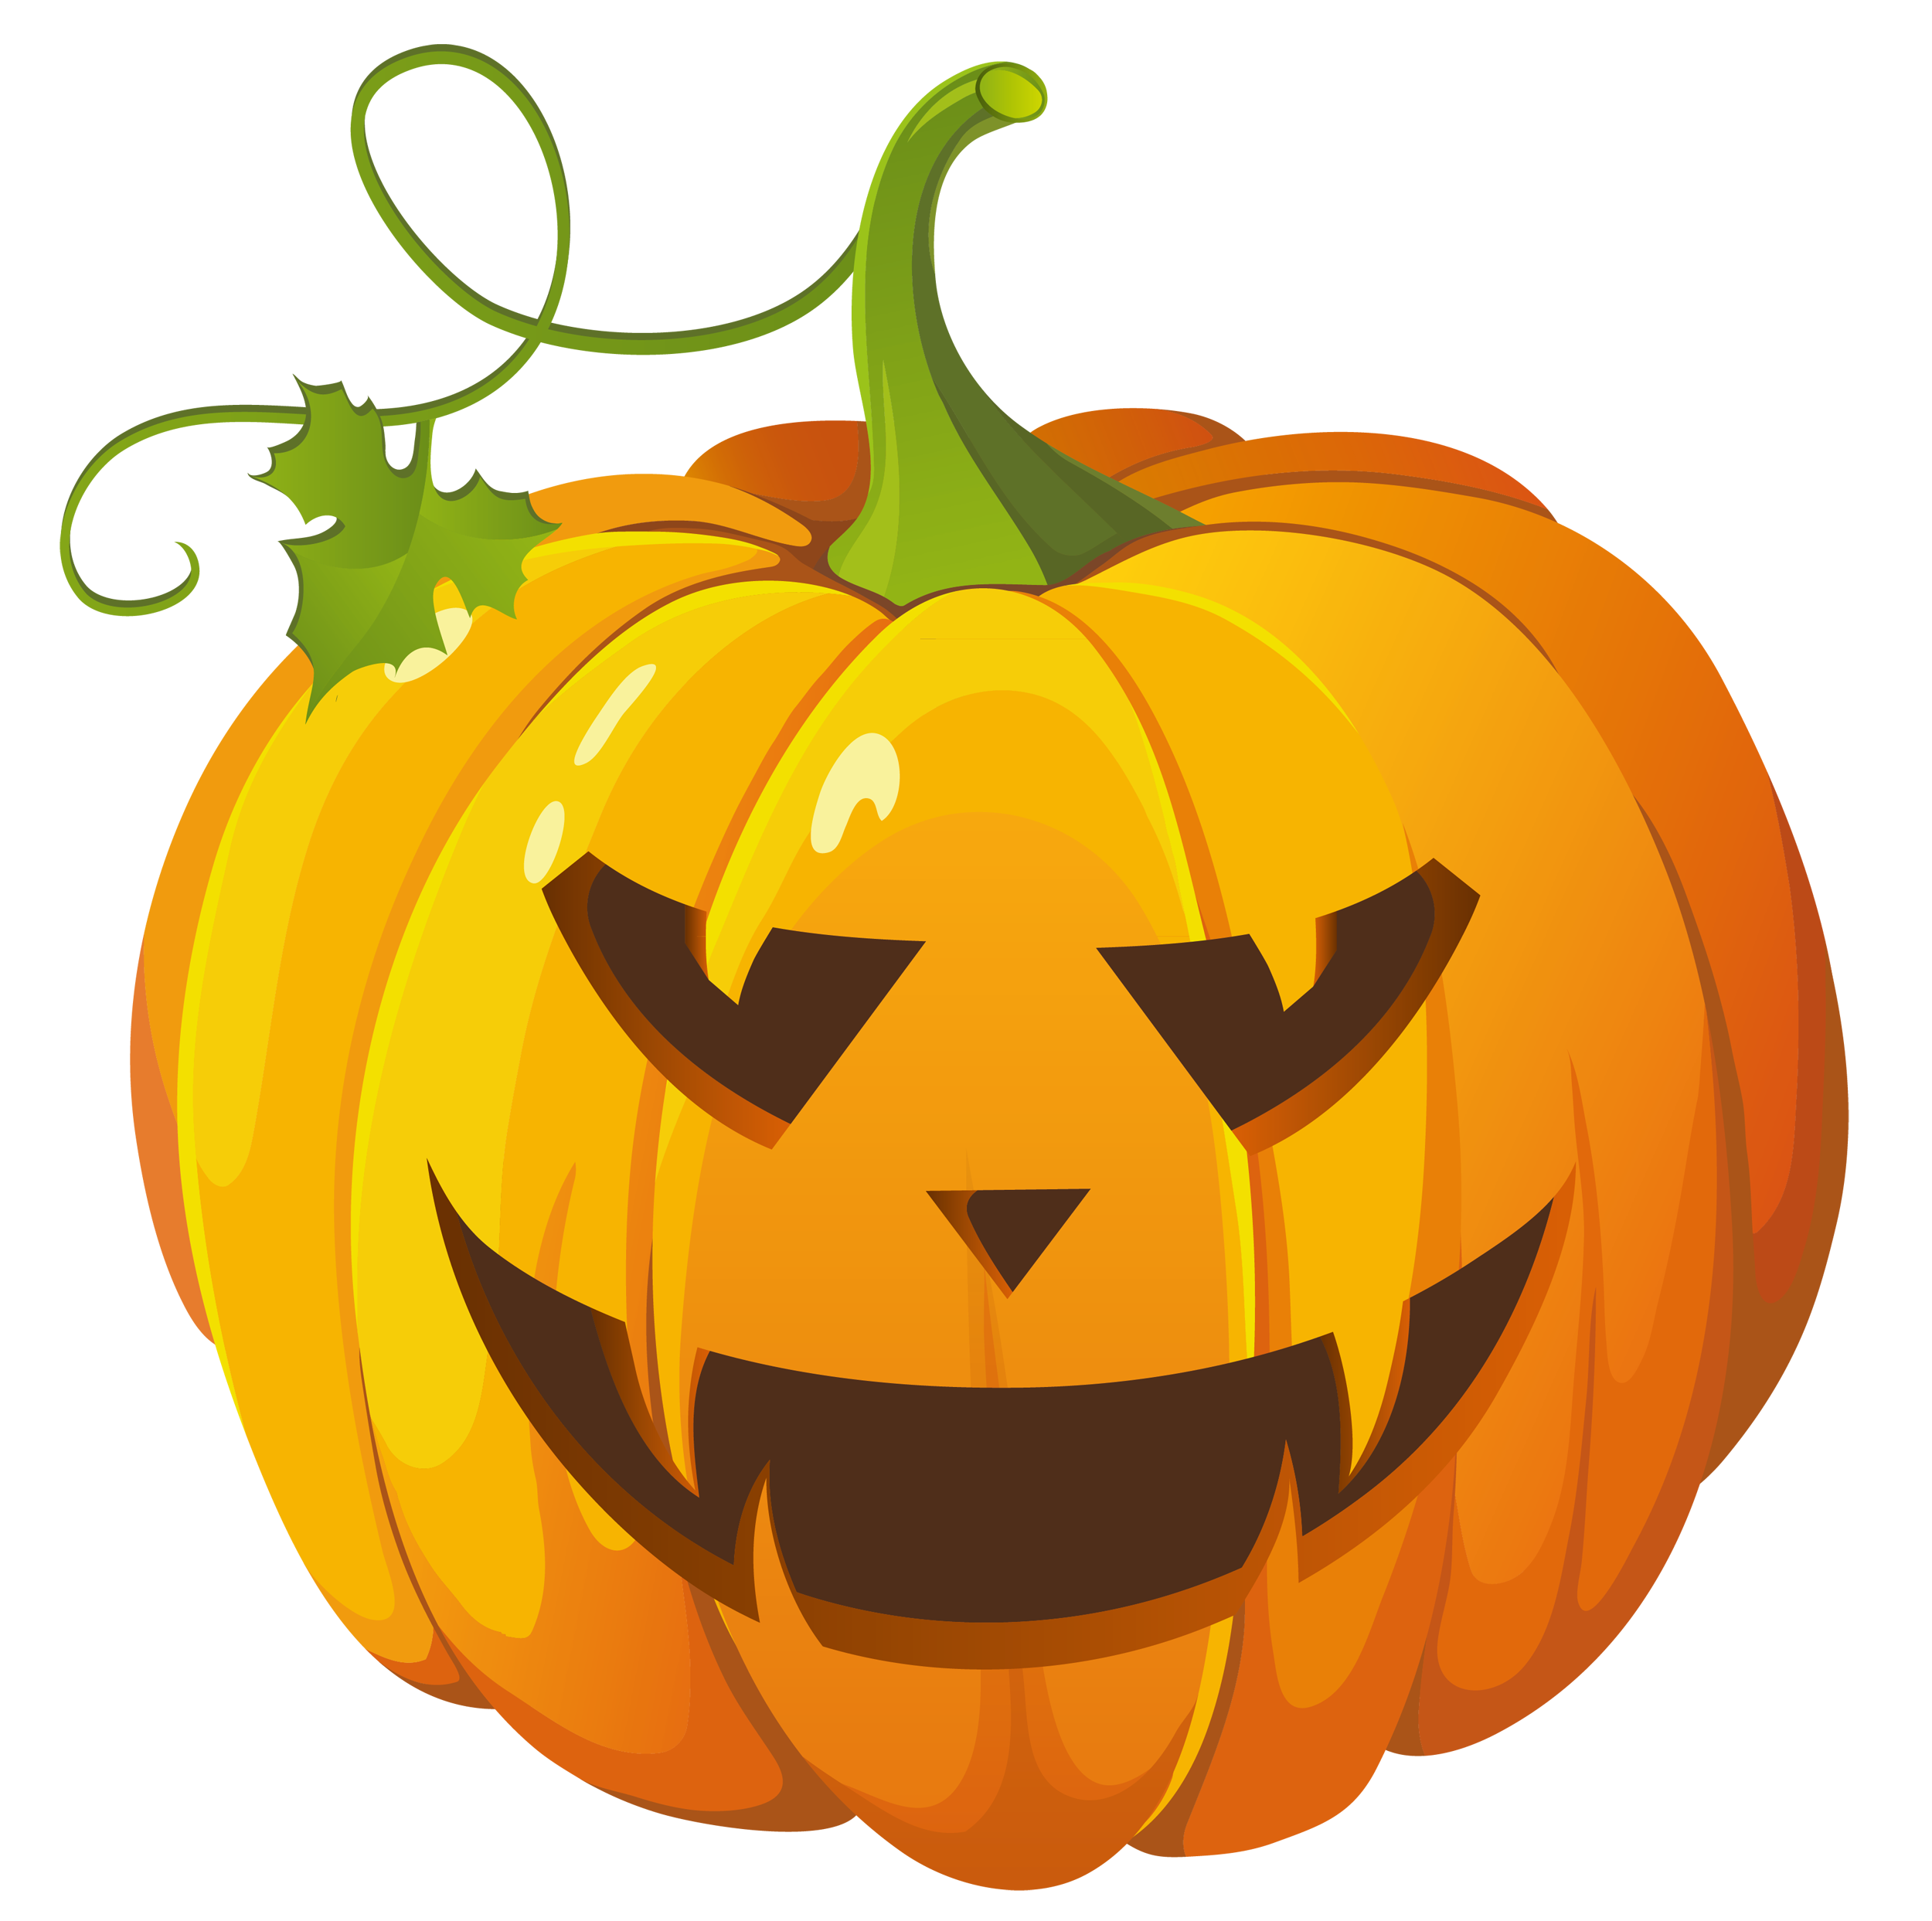 Large Halloween Jack-O'-Lantern Transparent Pumpkin PNG Image High Quality Clipart